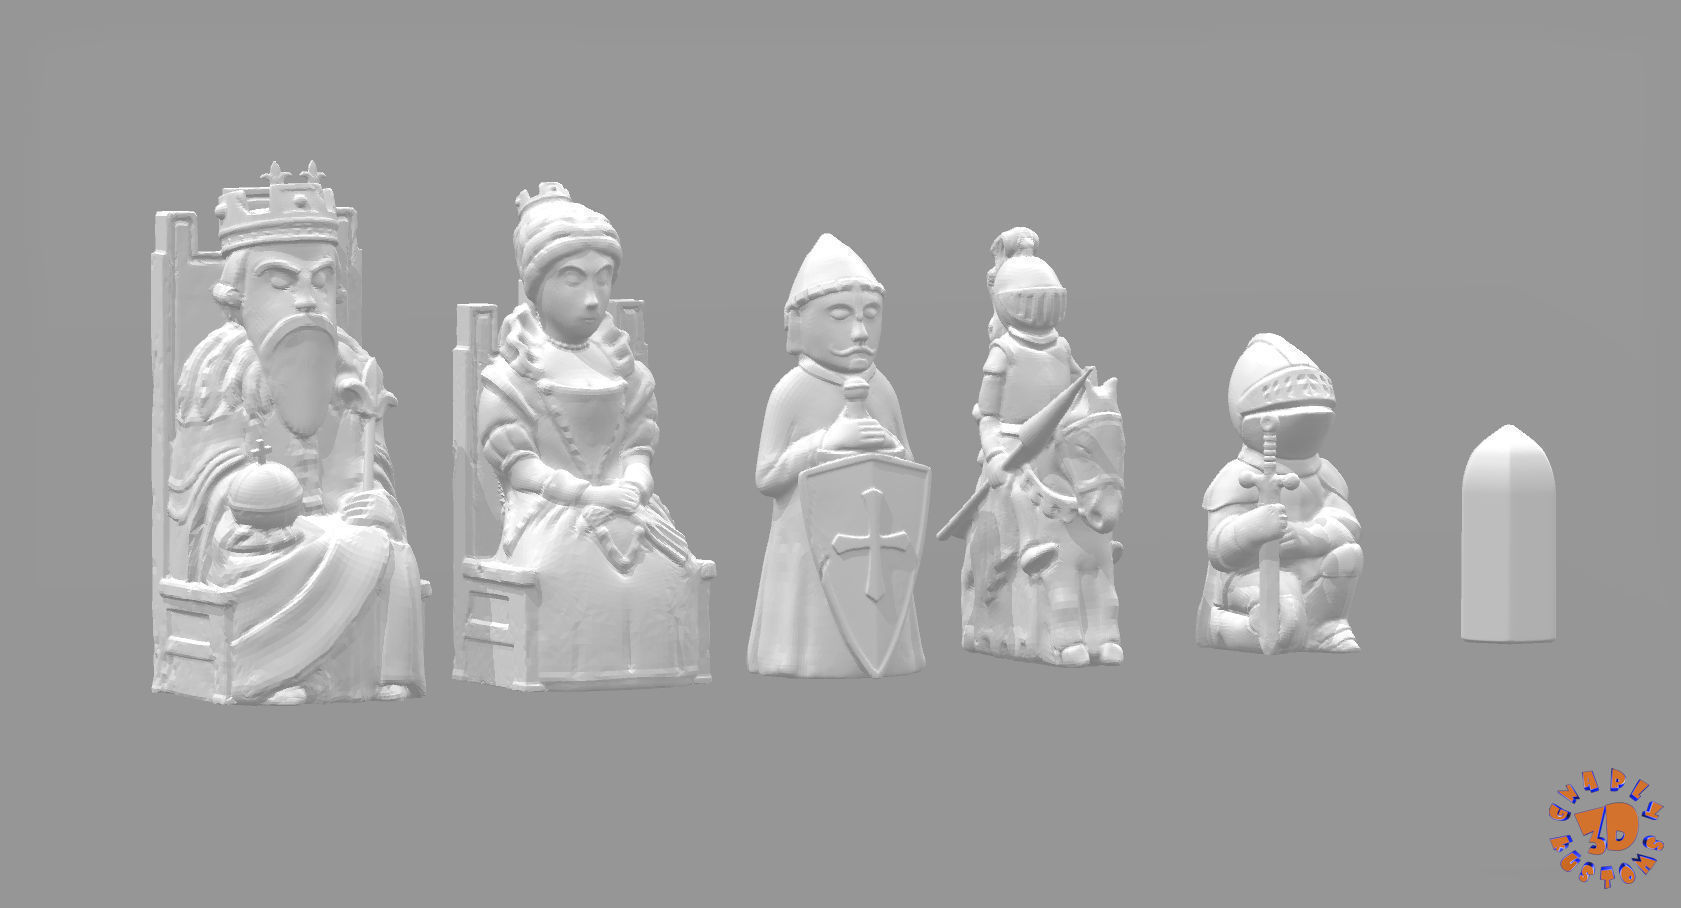 medieval chess set 3D Models to Print - yeggi